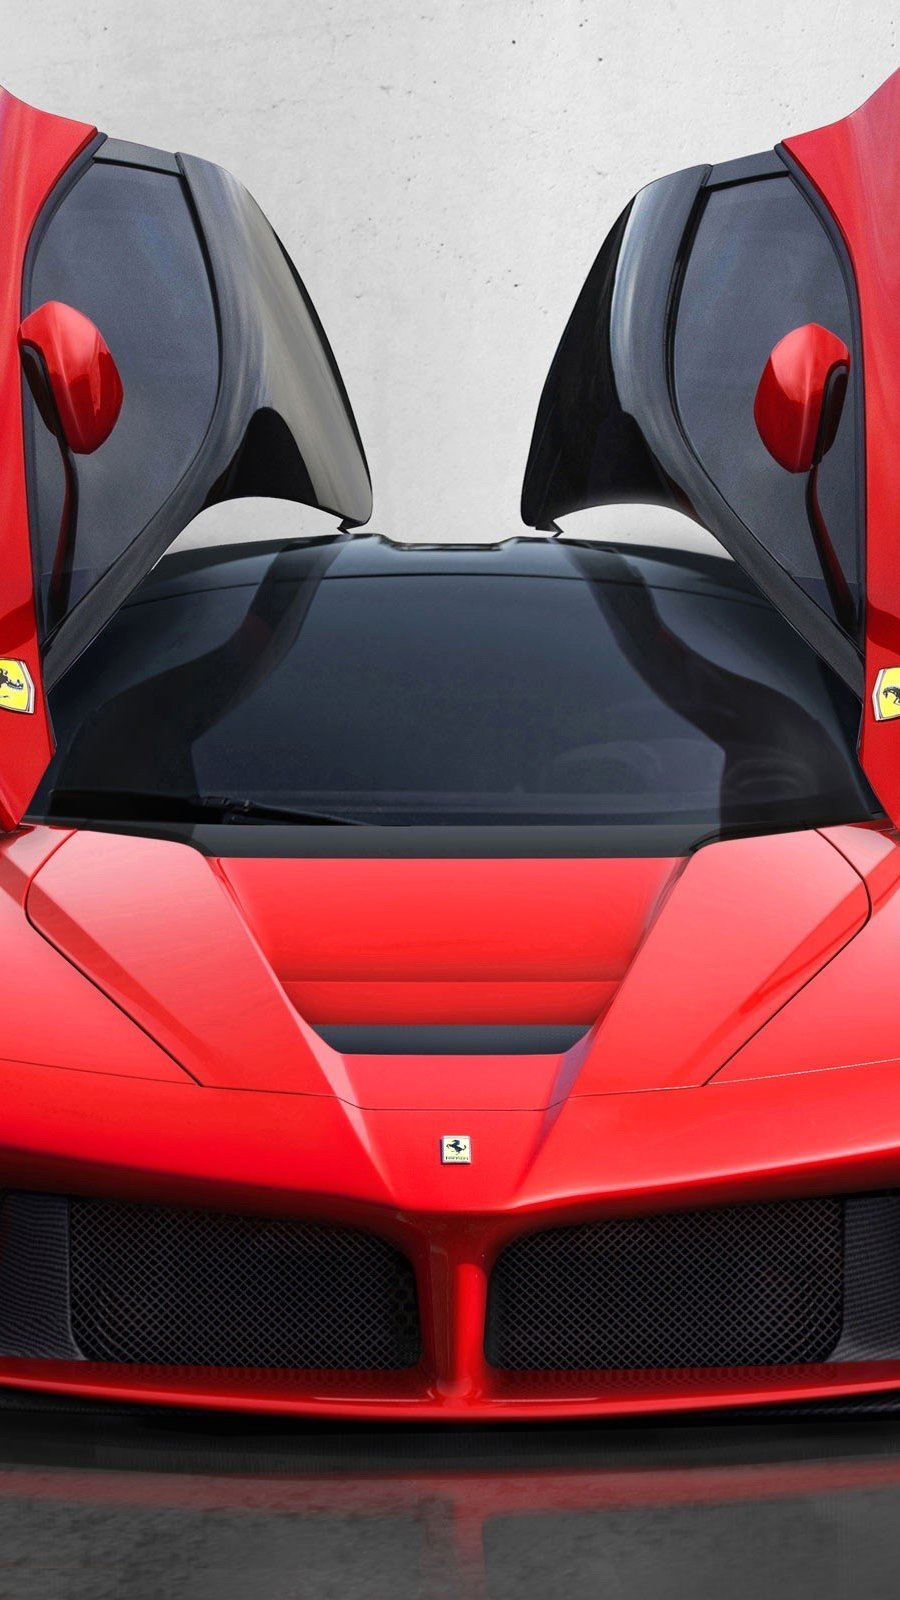 Fondos de pantalla Ferrari Laferrari Vertical